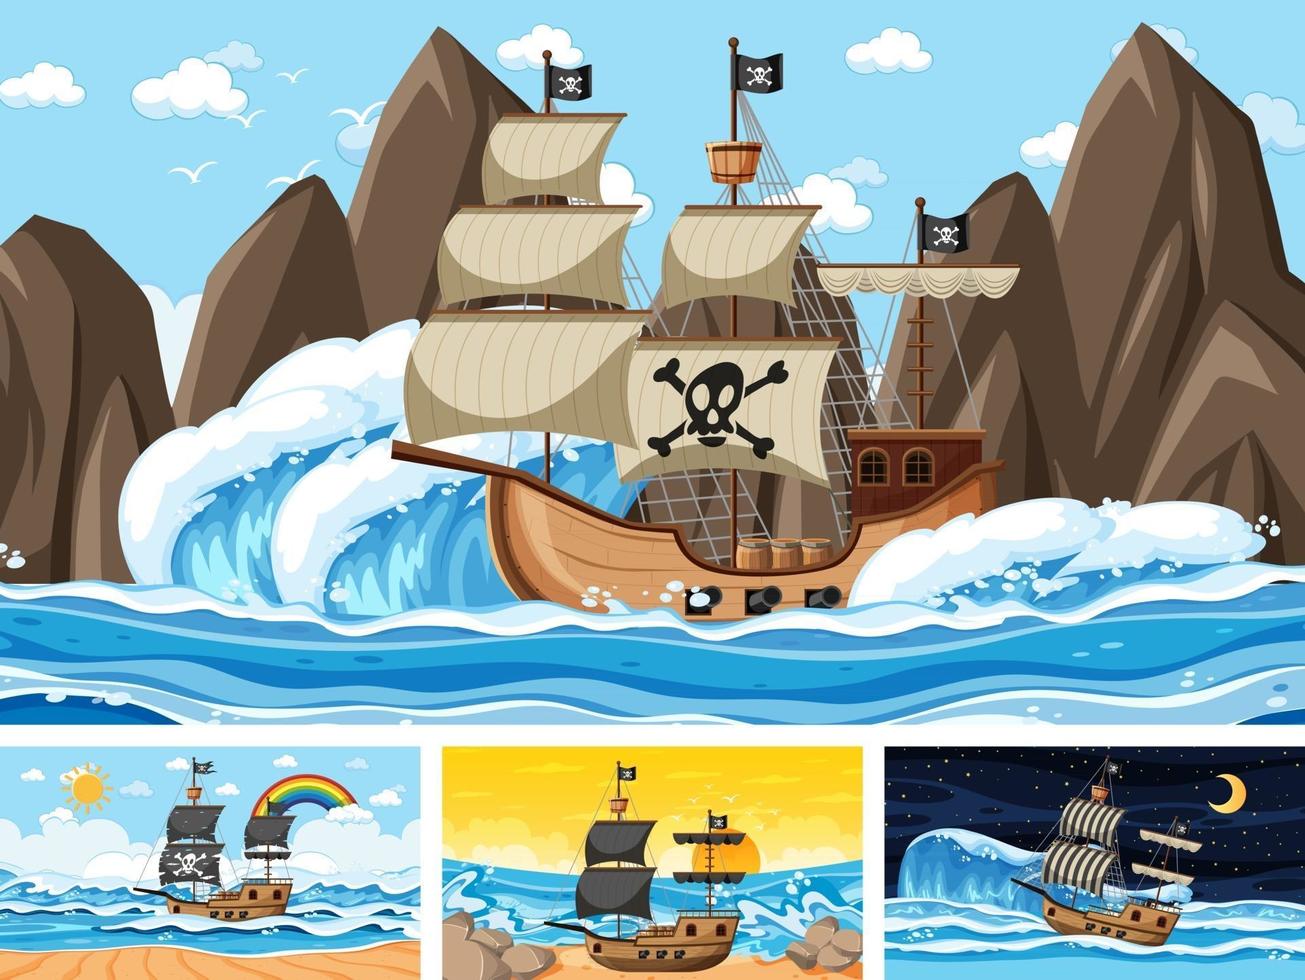 conjunto de océano con barco pirata en diferentes momentos escenas en estilo de dibujos animados vector